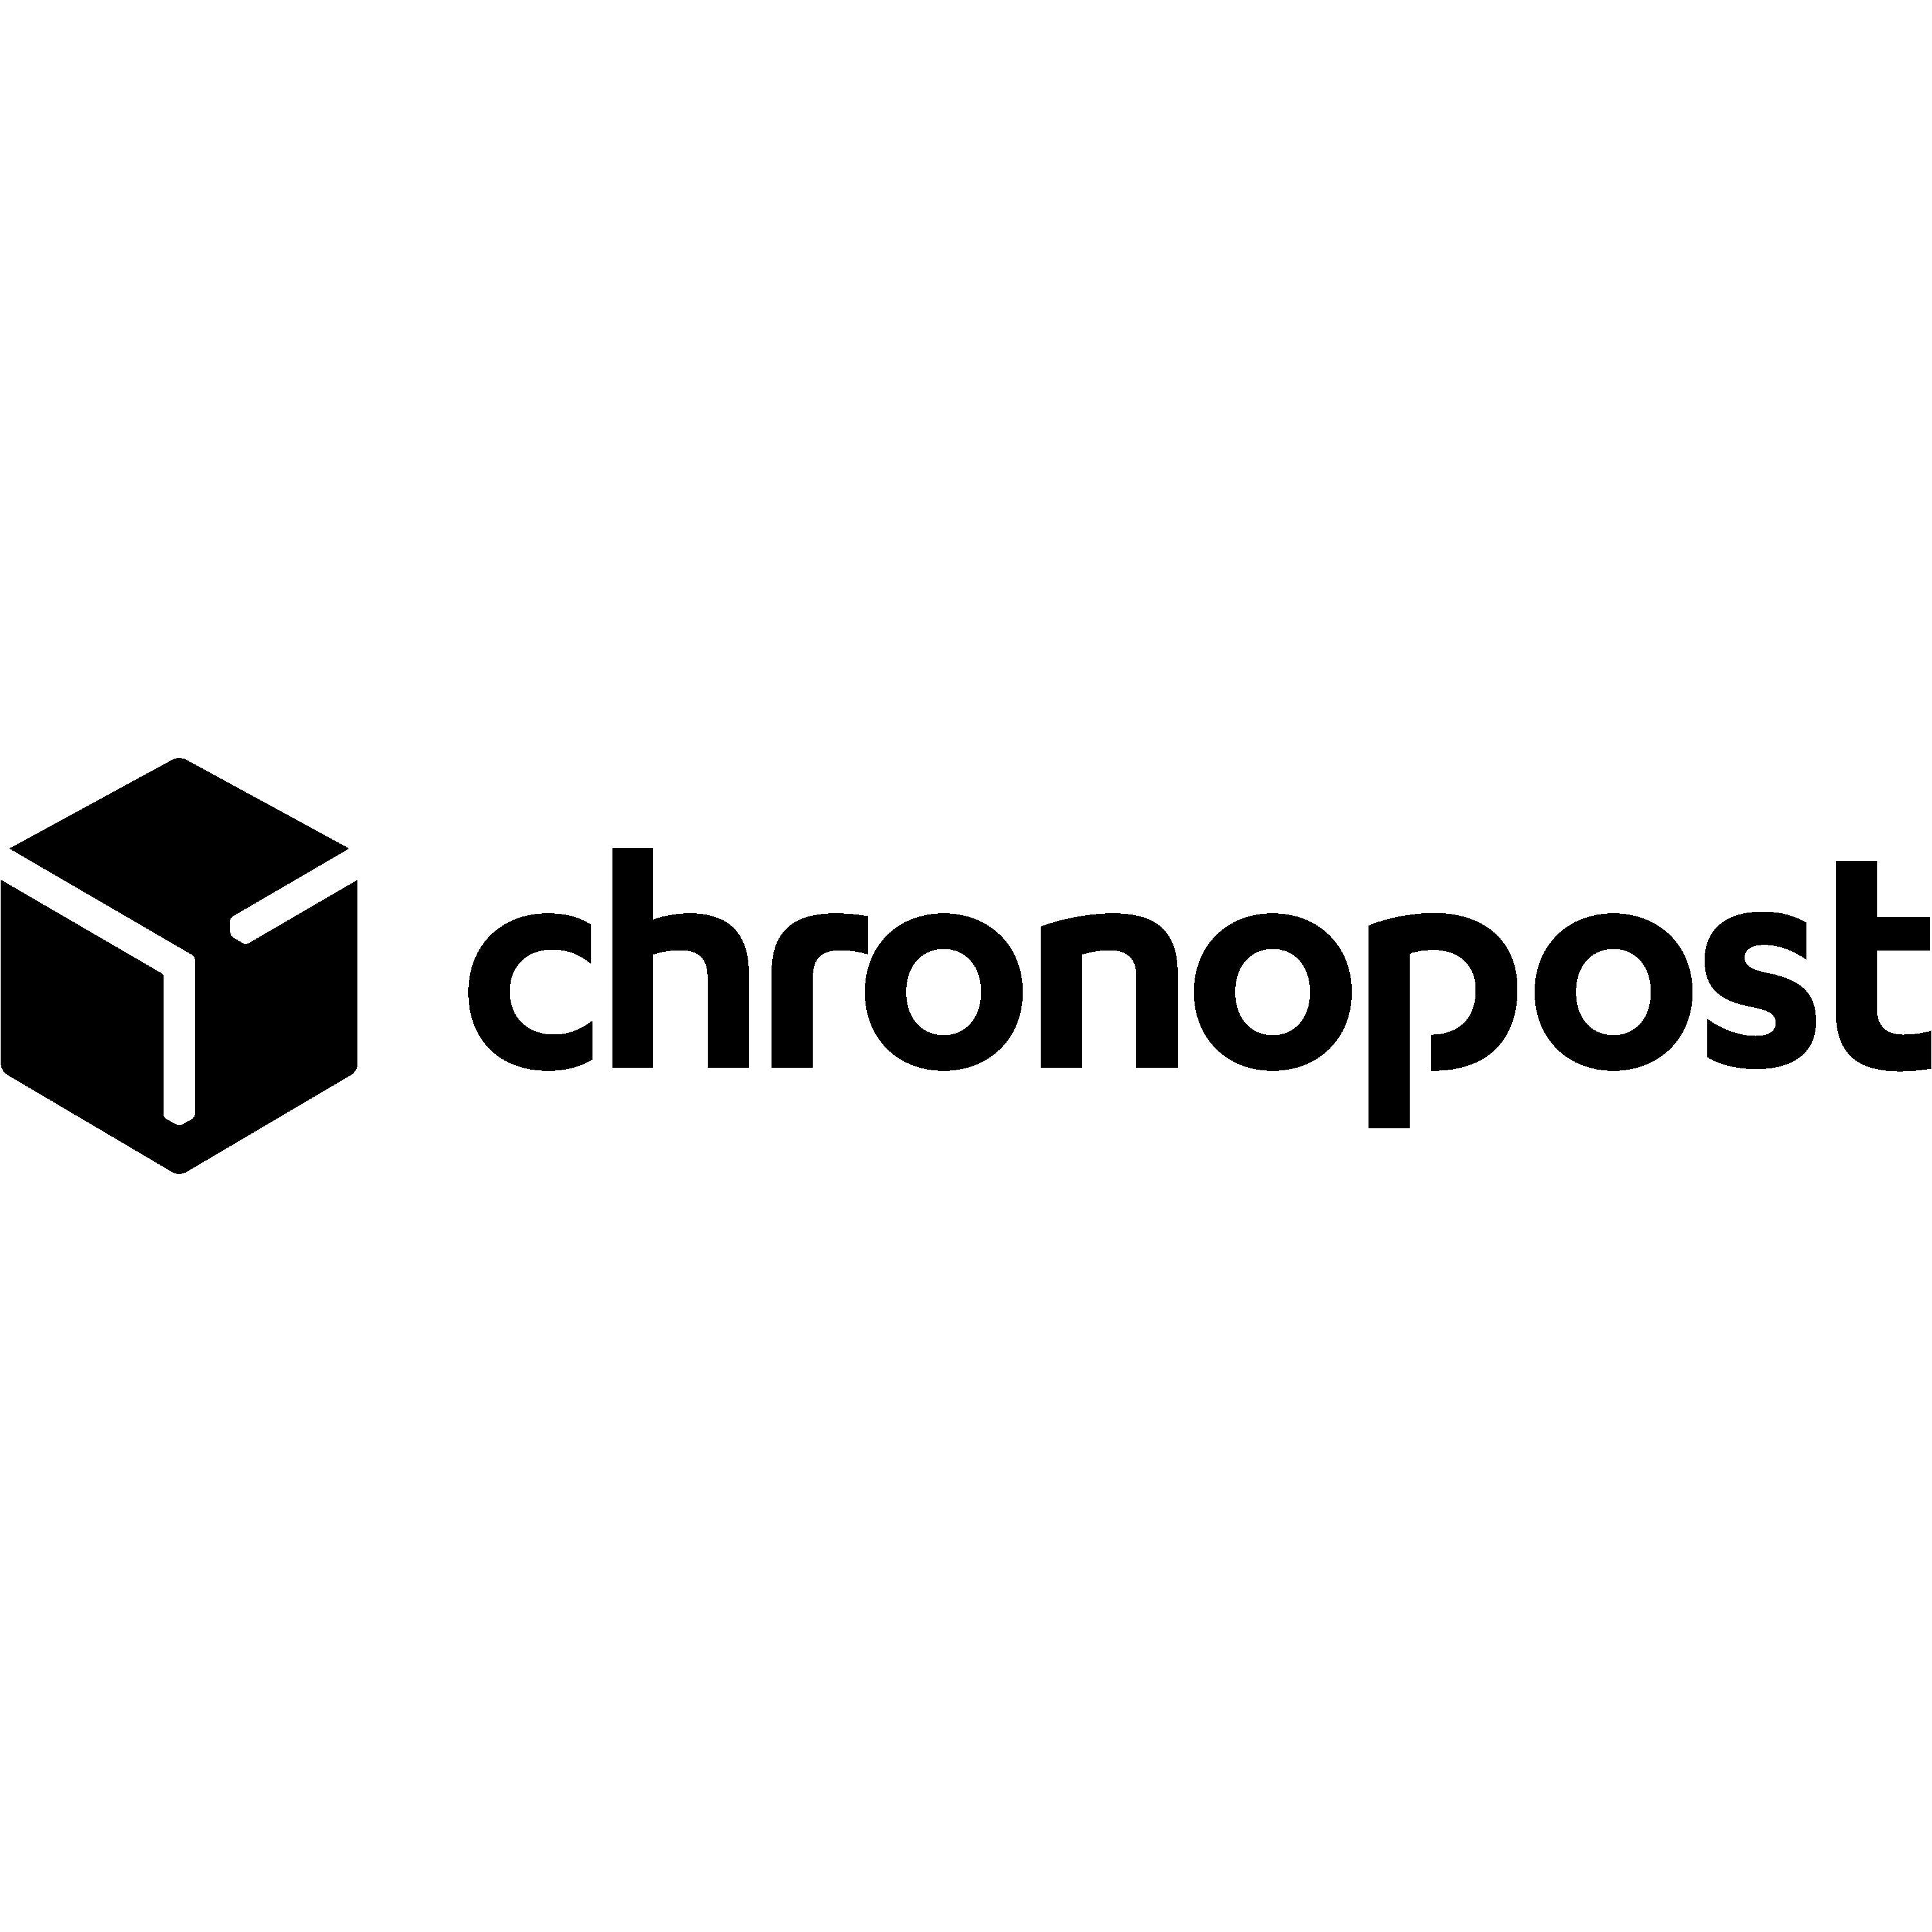 Chronopost Logo Transparent Picture